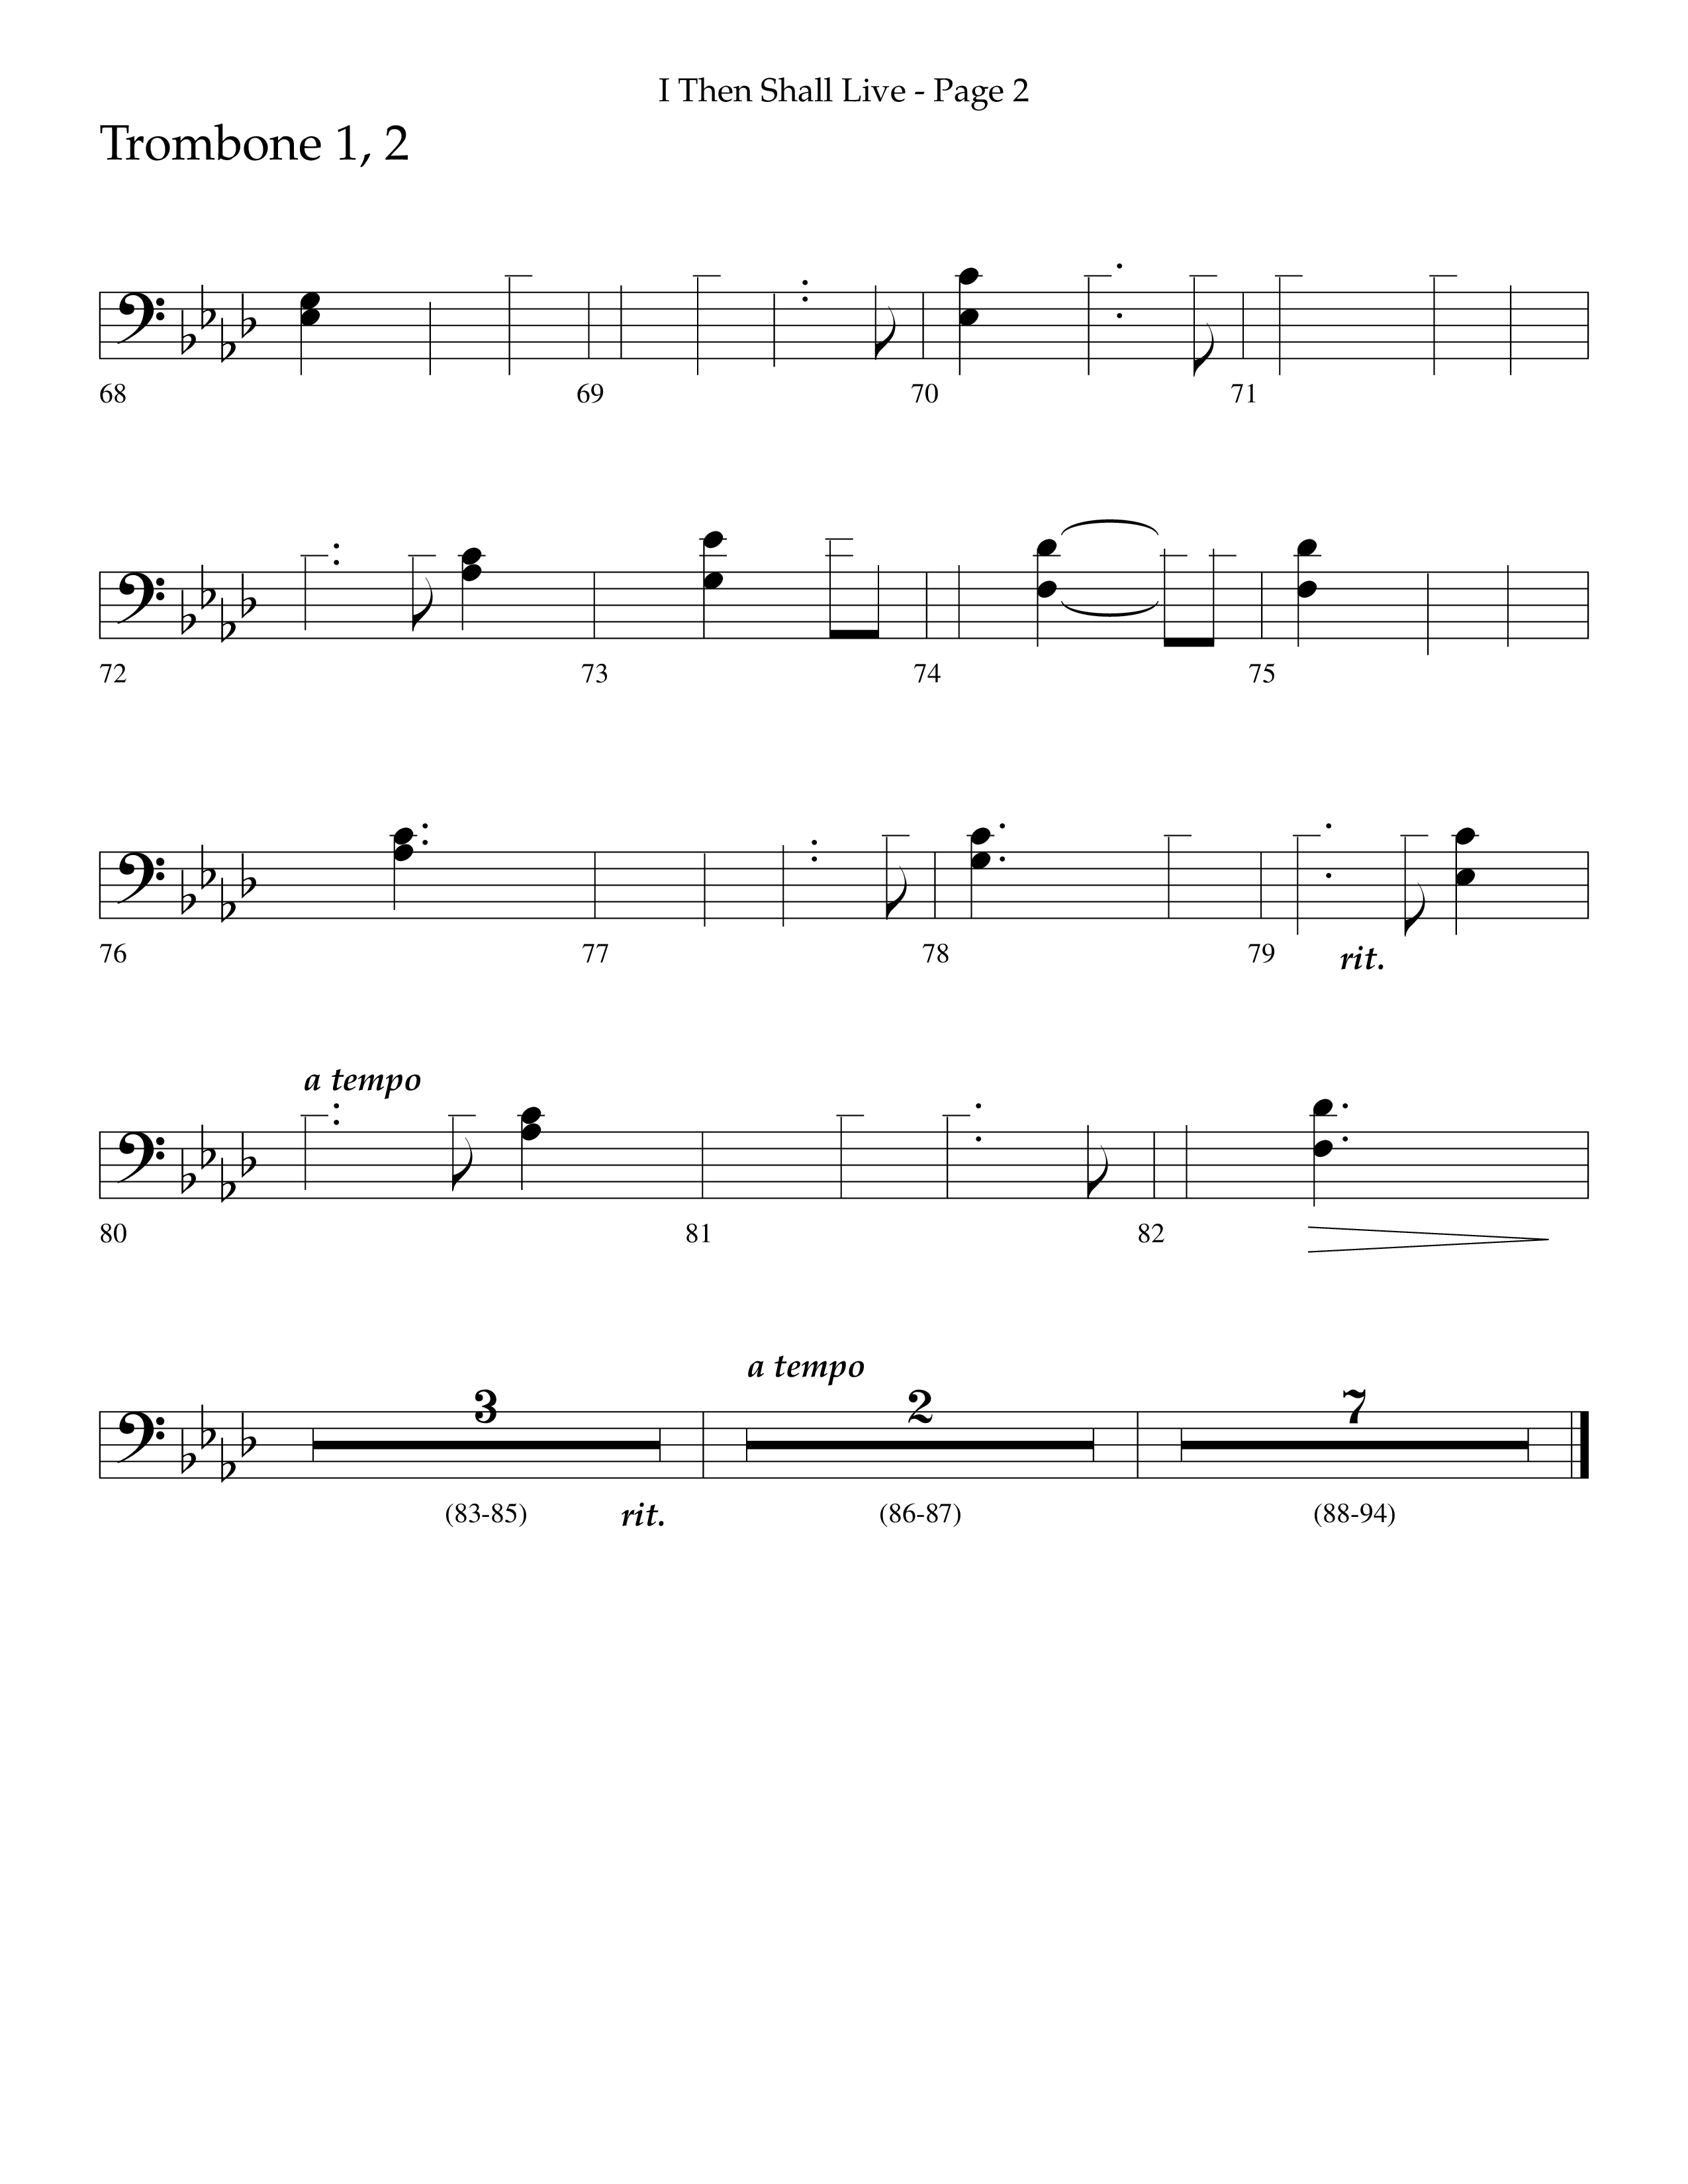 I Then Shall Live (Finlandia) (Choral Anthem SATB) Trombone 1/2 (Lifeway Choral / Arr. Camp Kirkland)